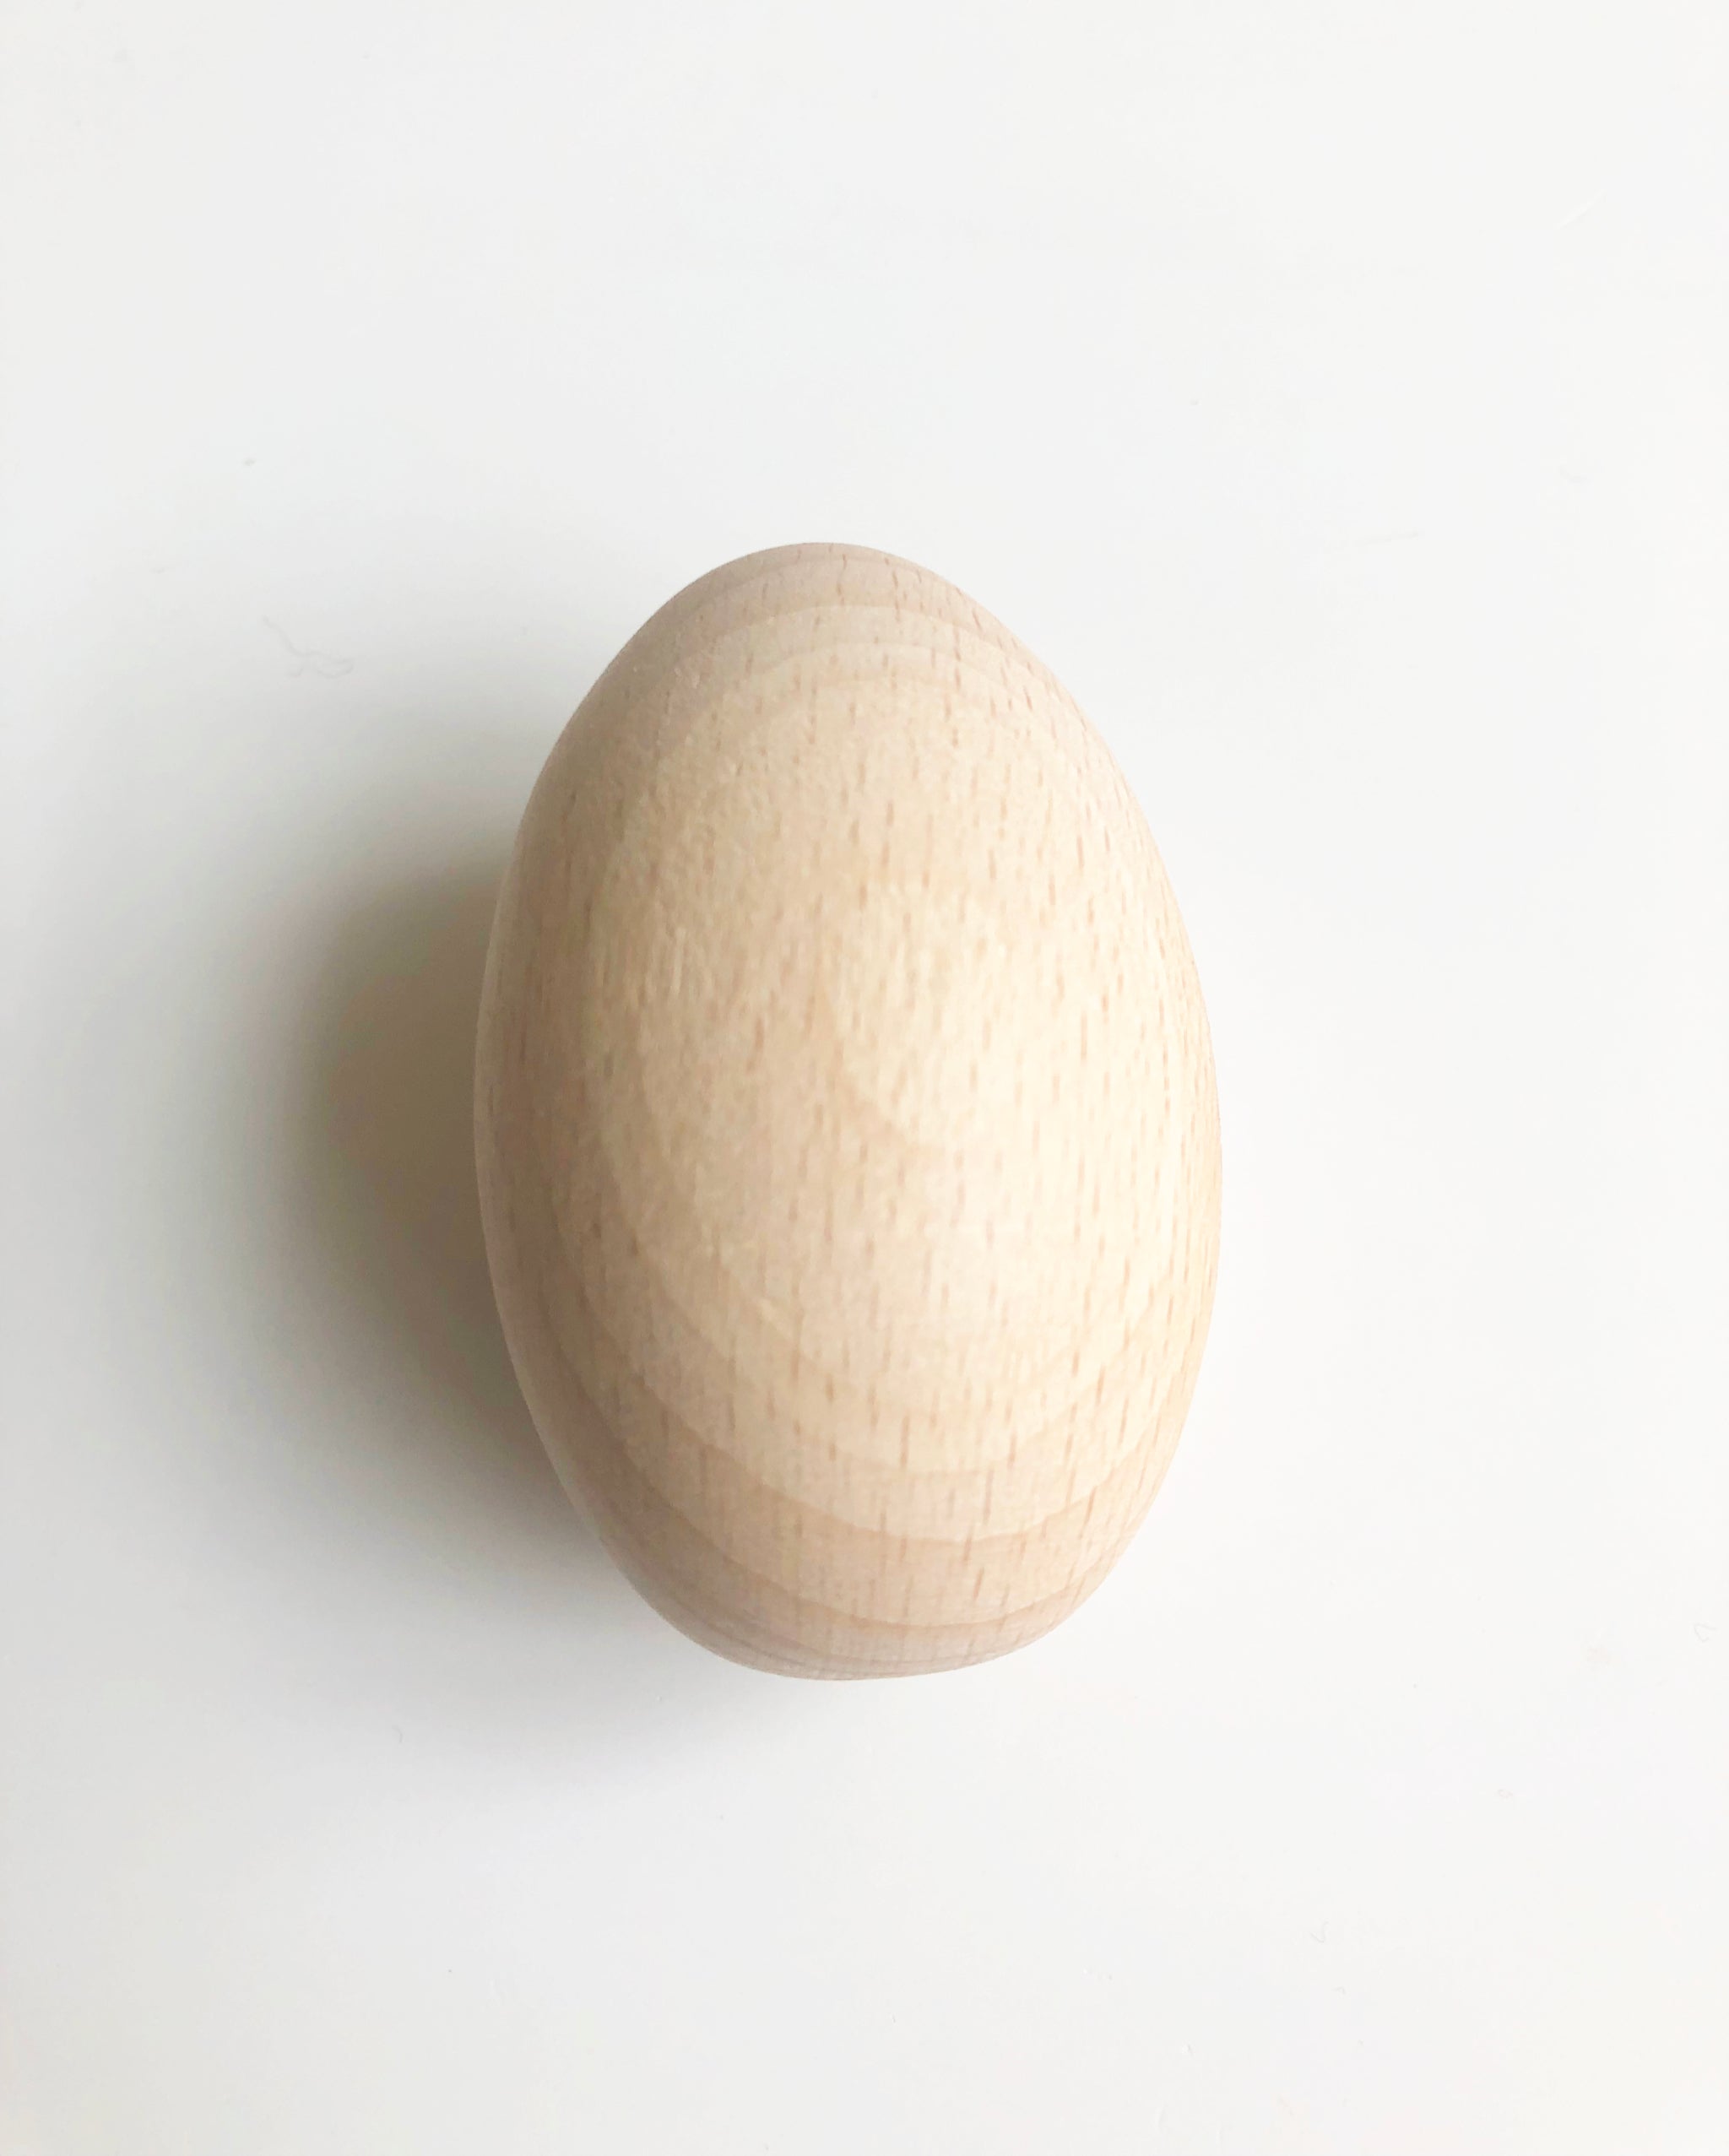 File:Darning egg.jpg - Wikipedia